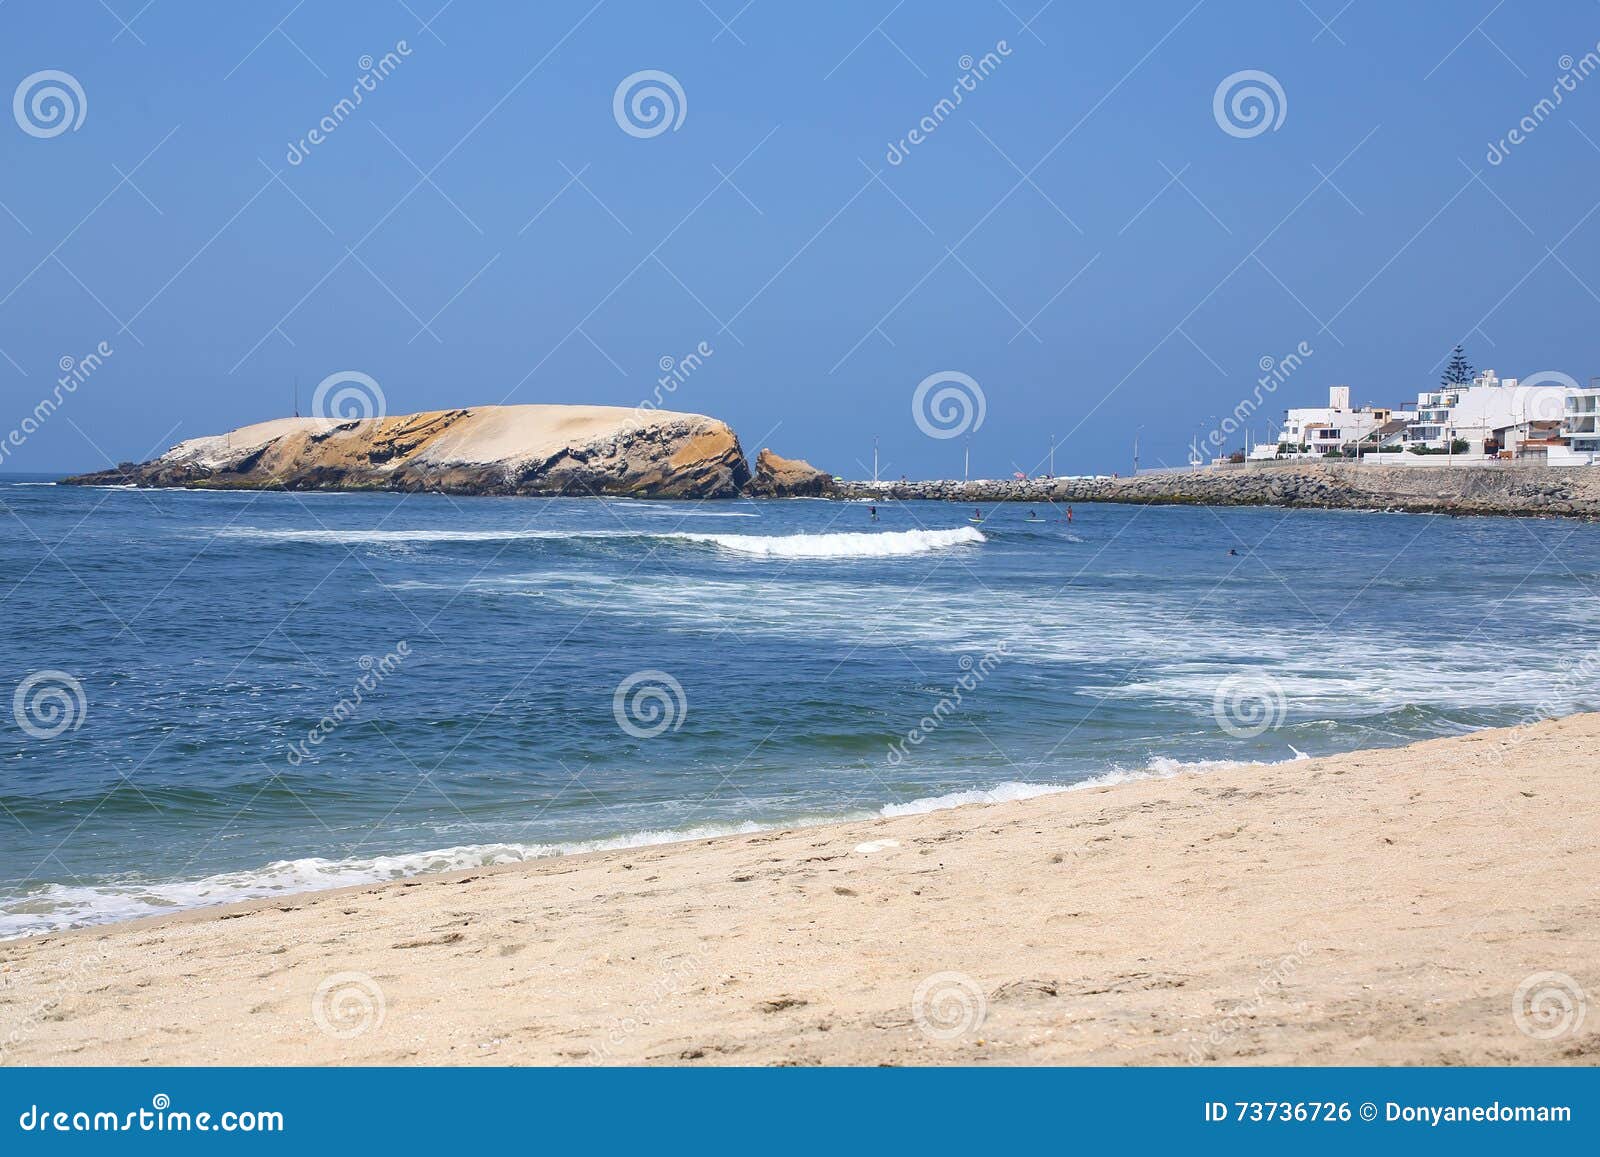 sandy beach of punta hermosa in peru